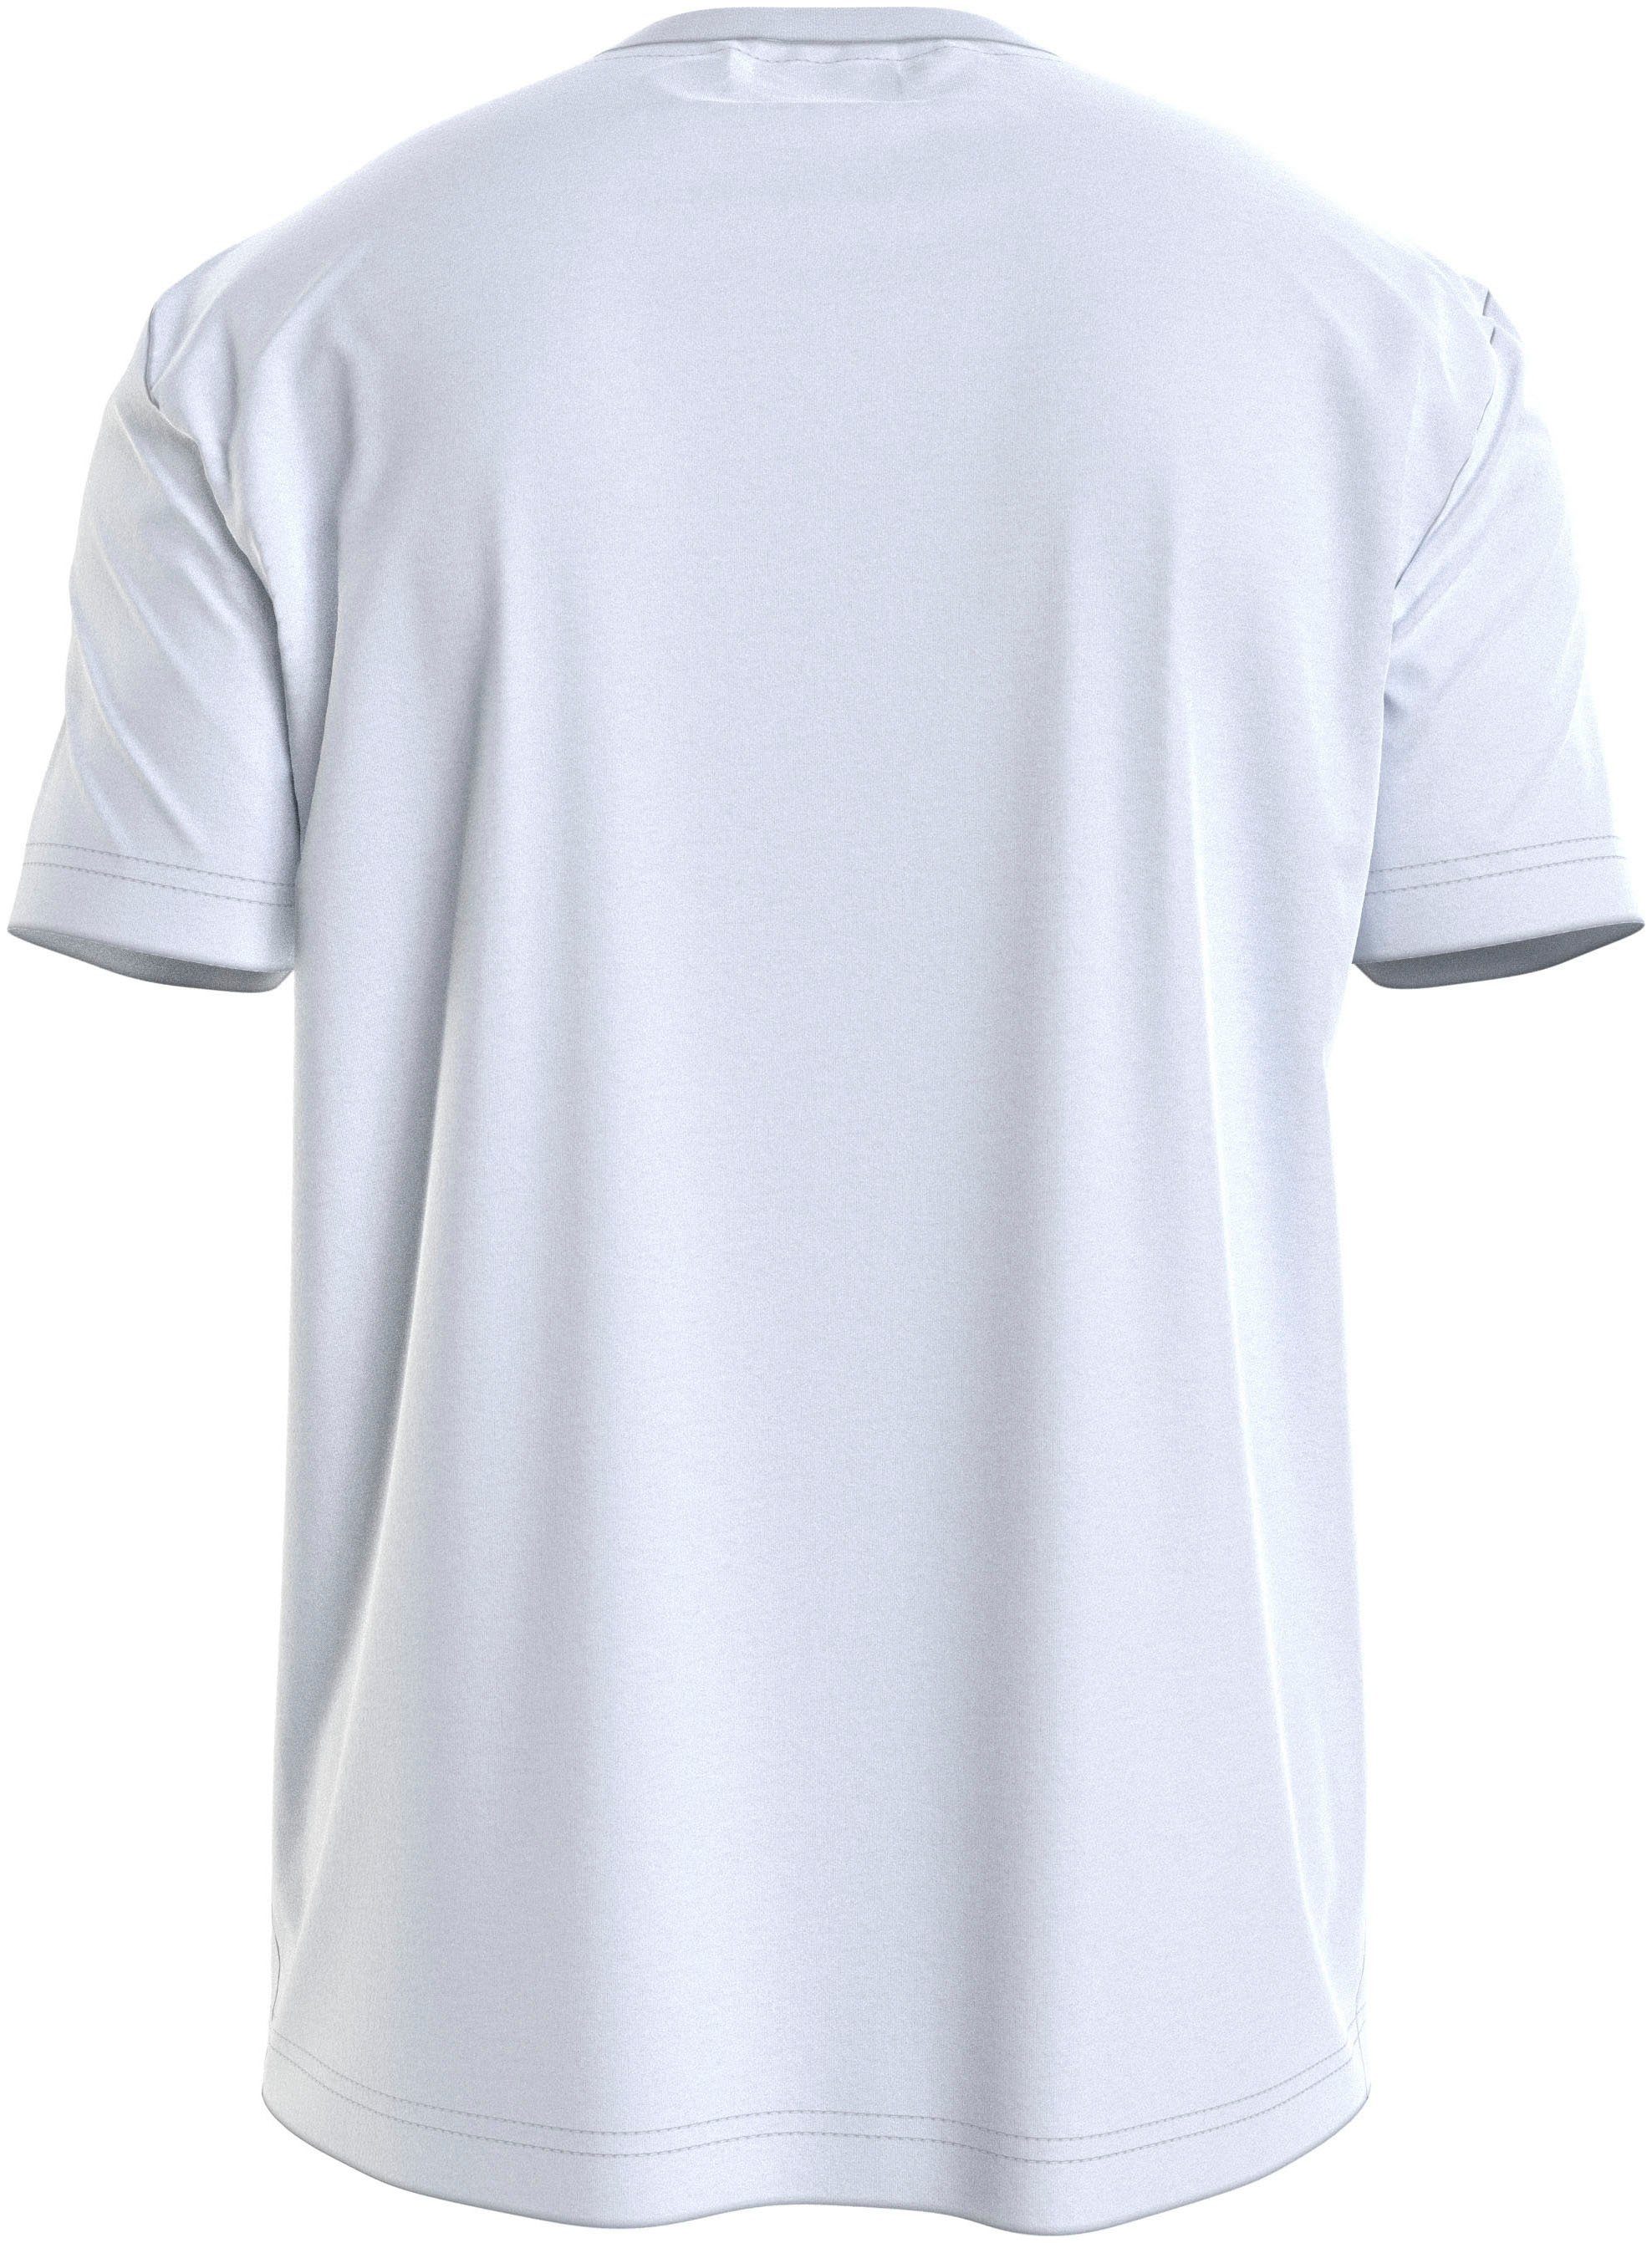 Calvin Klein T-Shirt Bright LOGO T-SHIRT White OFF-PLACED